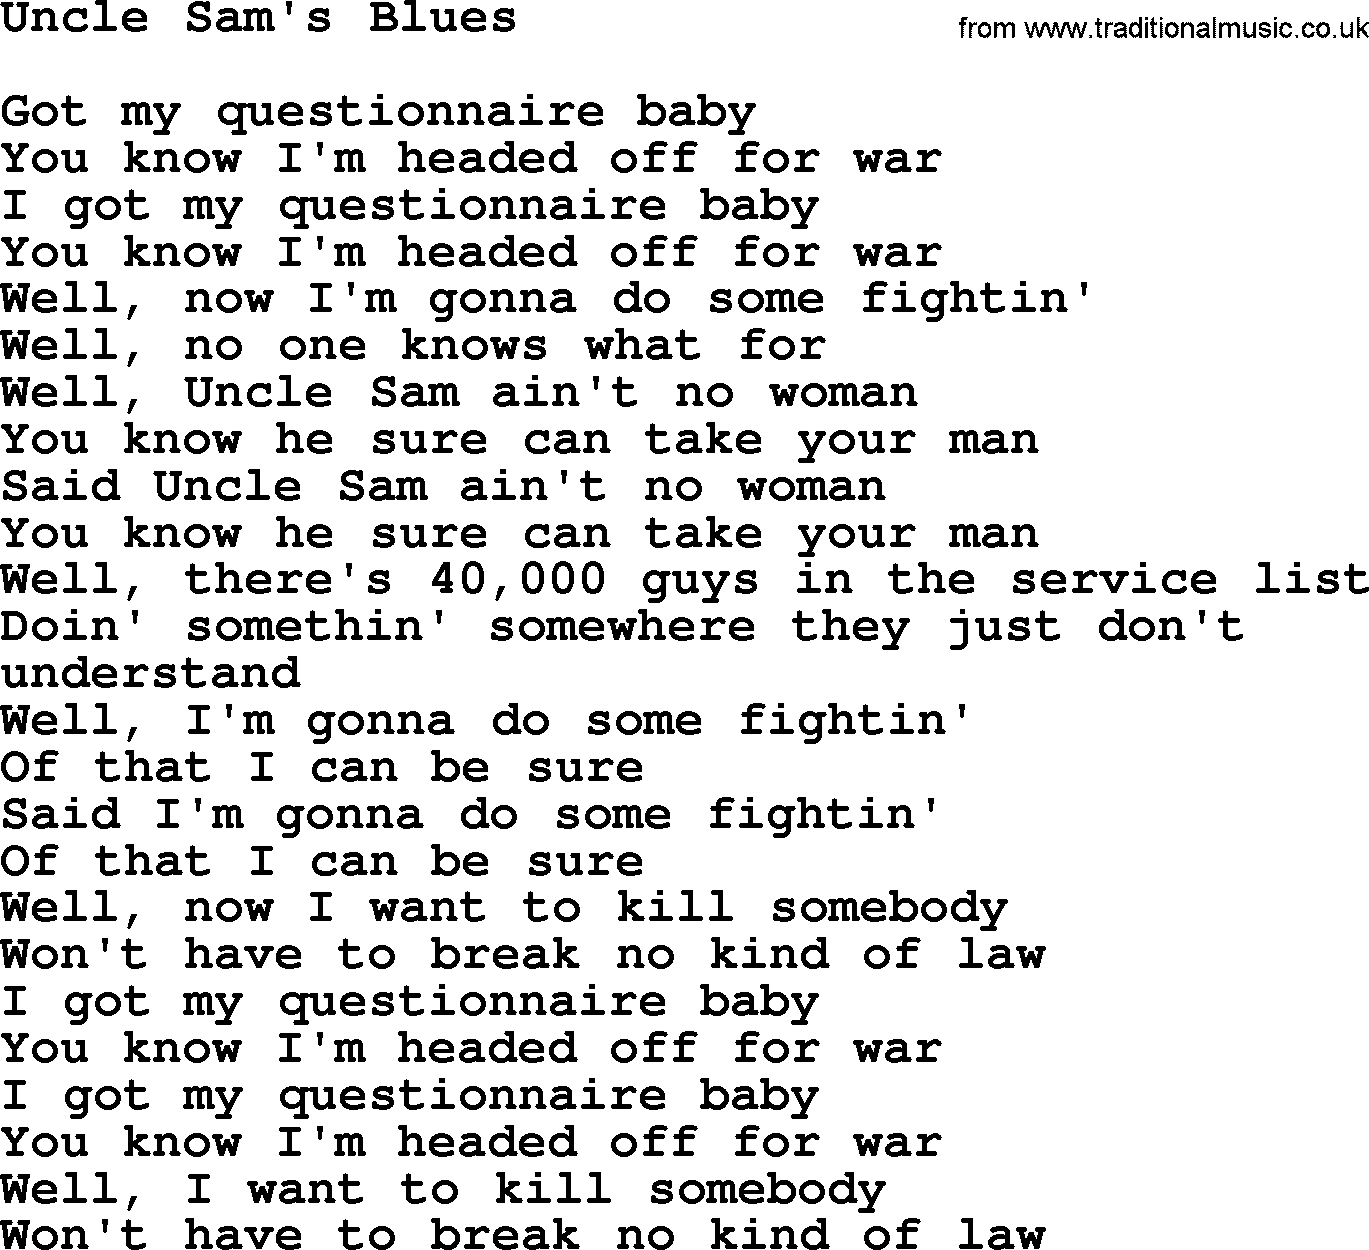 The Byrds song Uncle Sam's Blues, lyrics